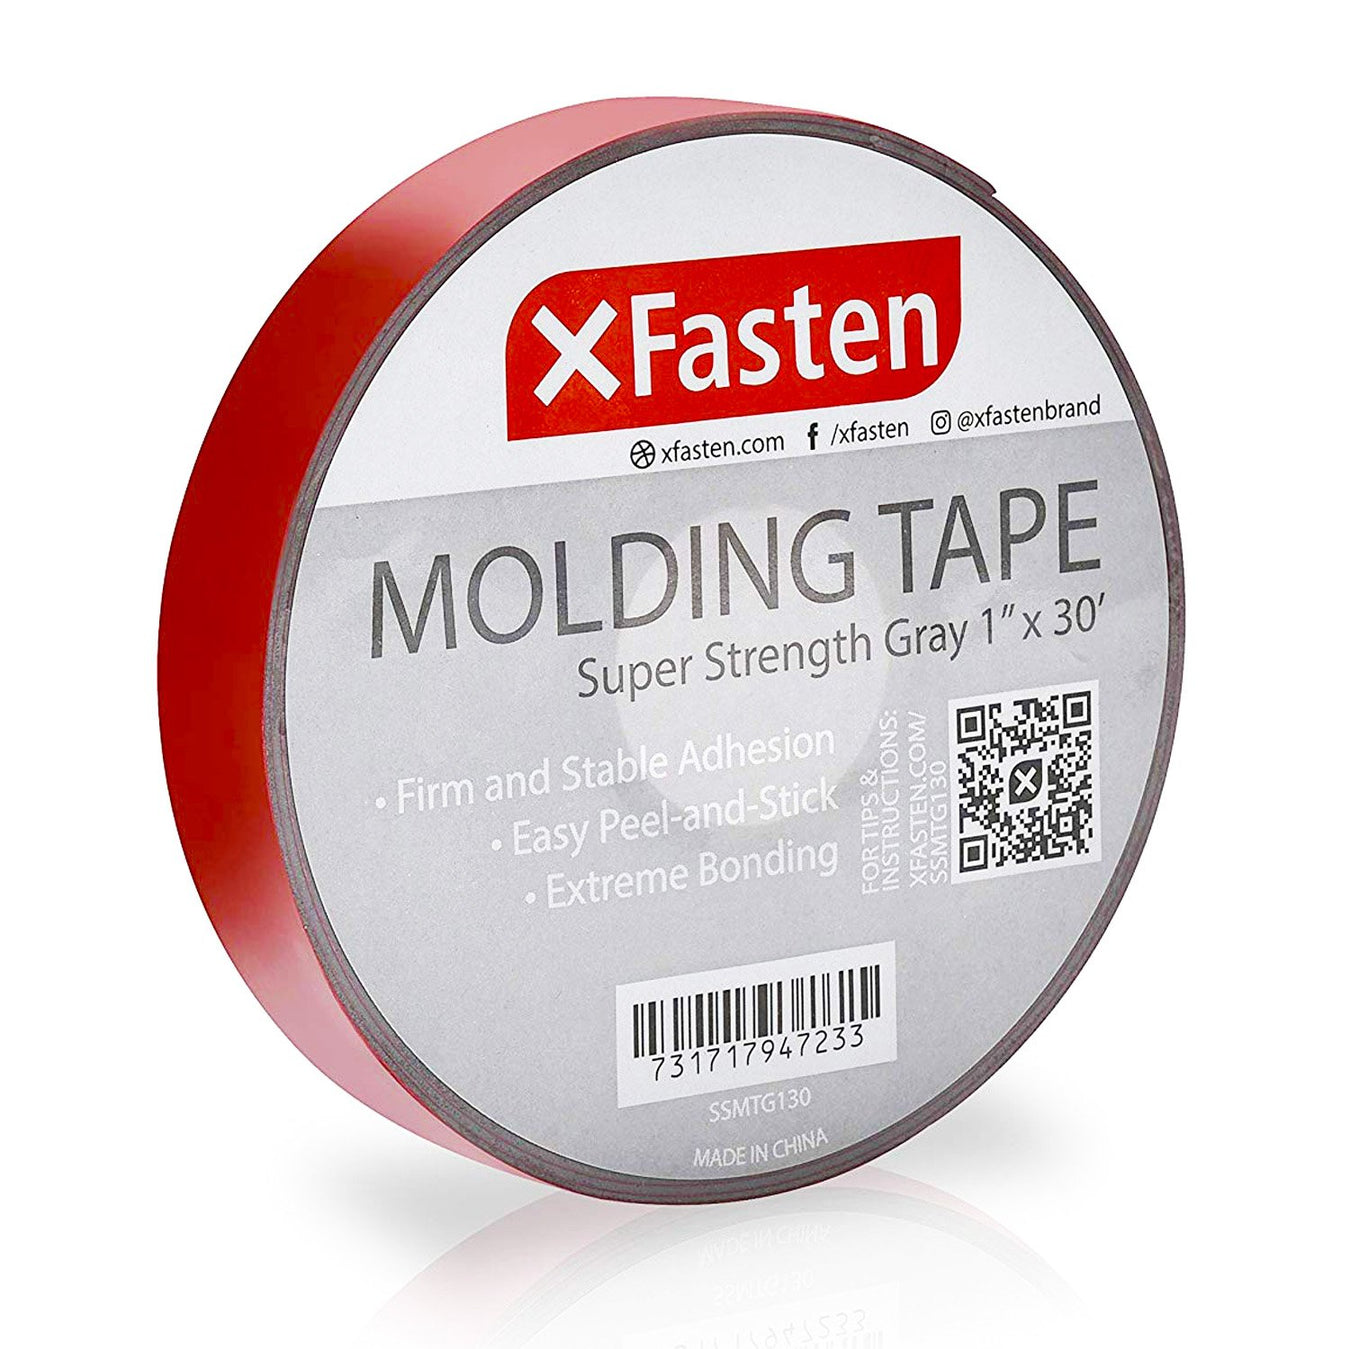 Super Strength Molding Tape - XFasten